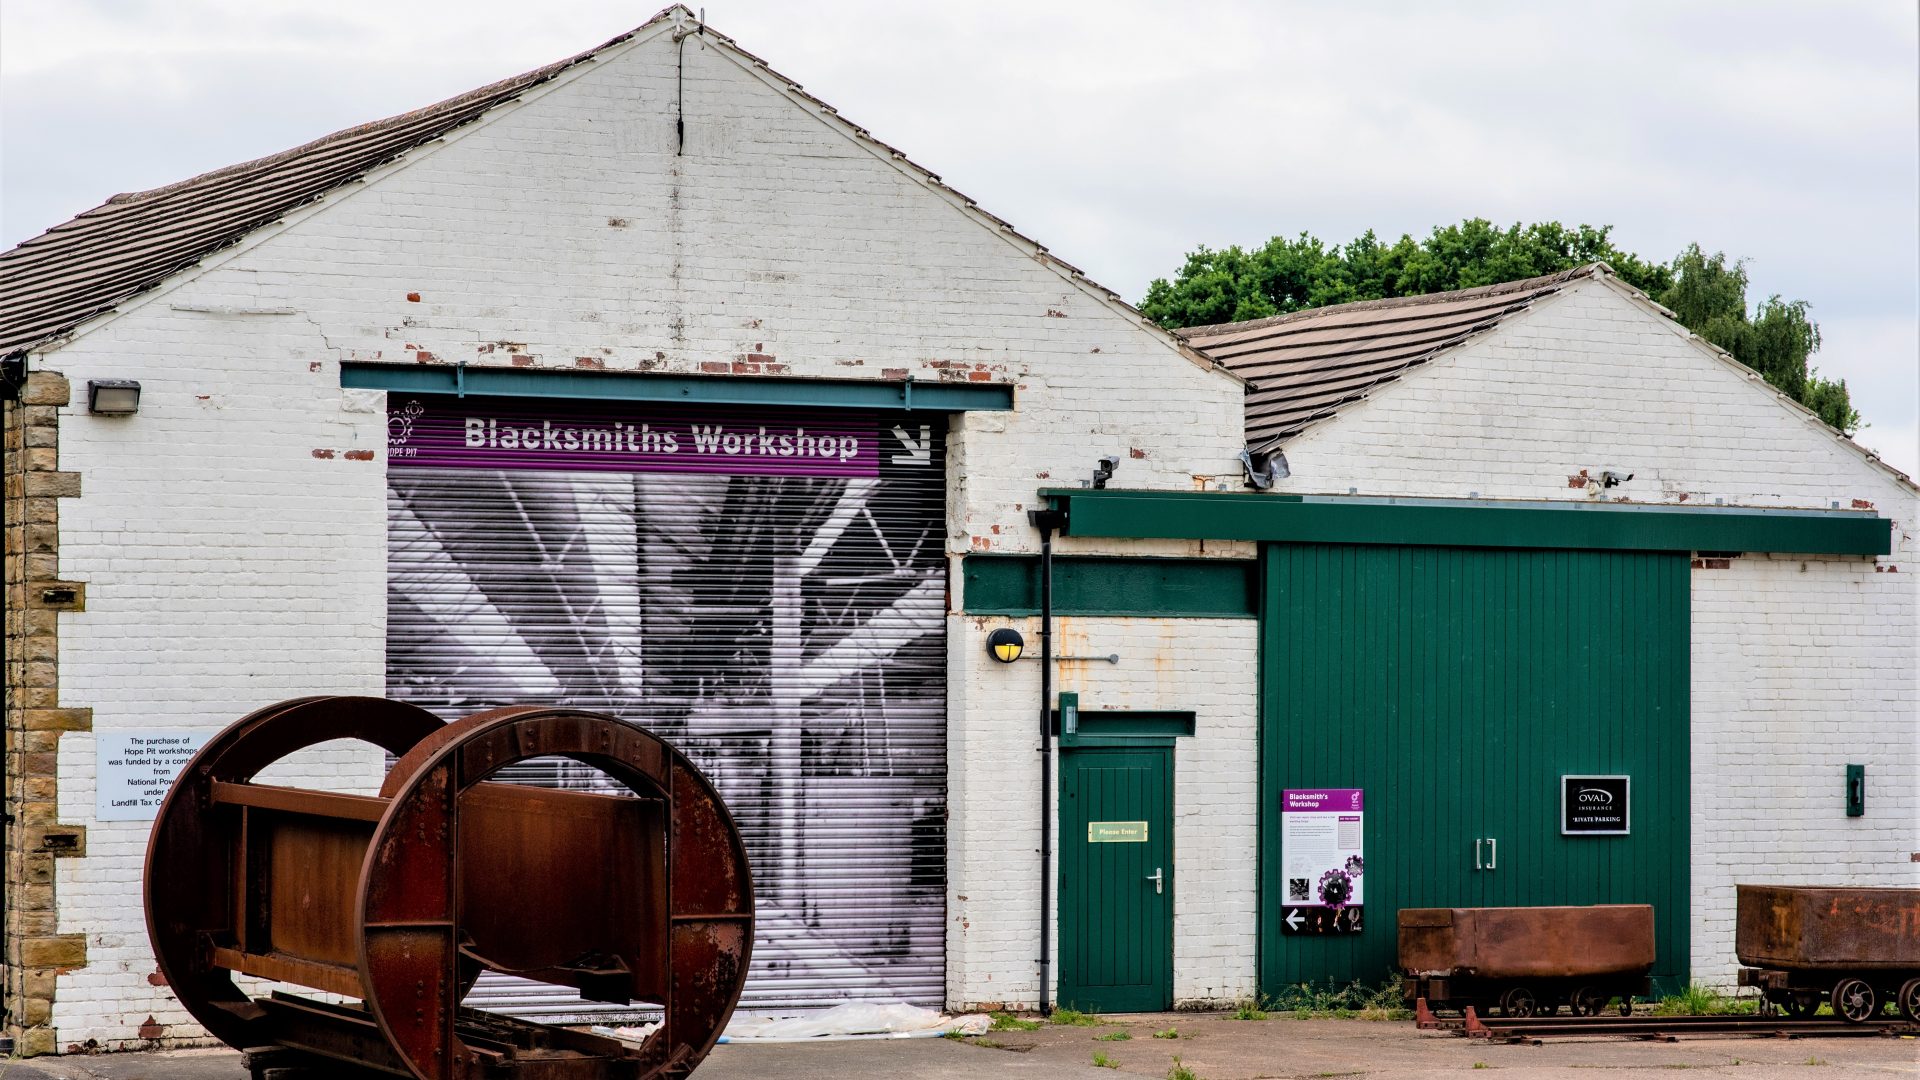 Blacksmiths Workshop